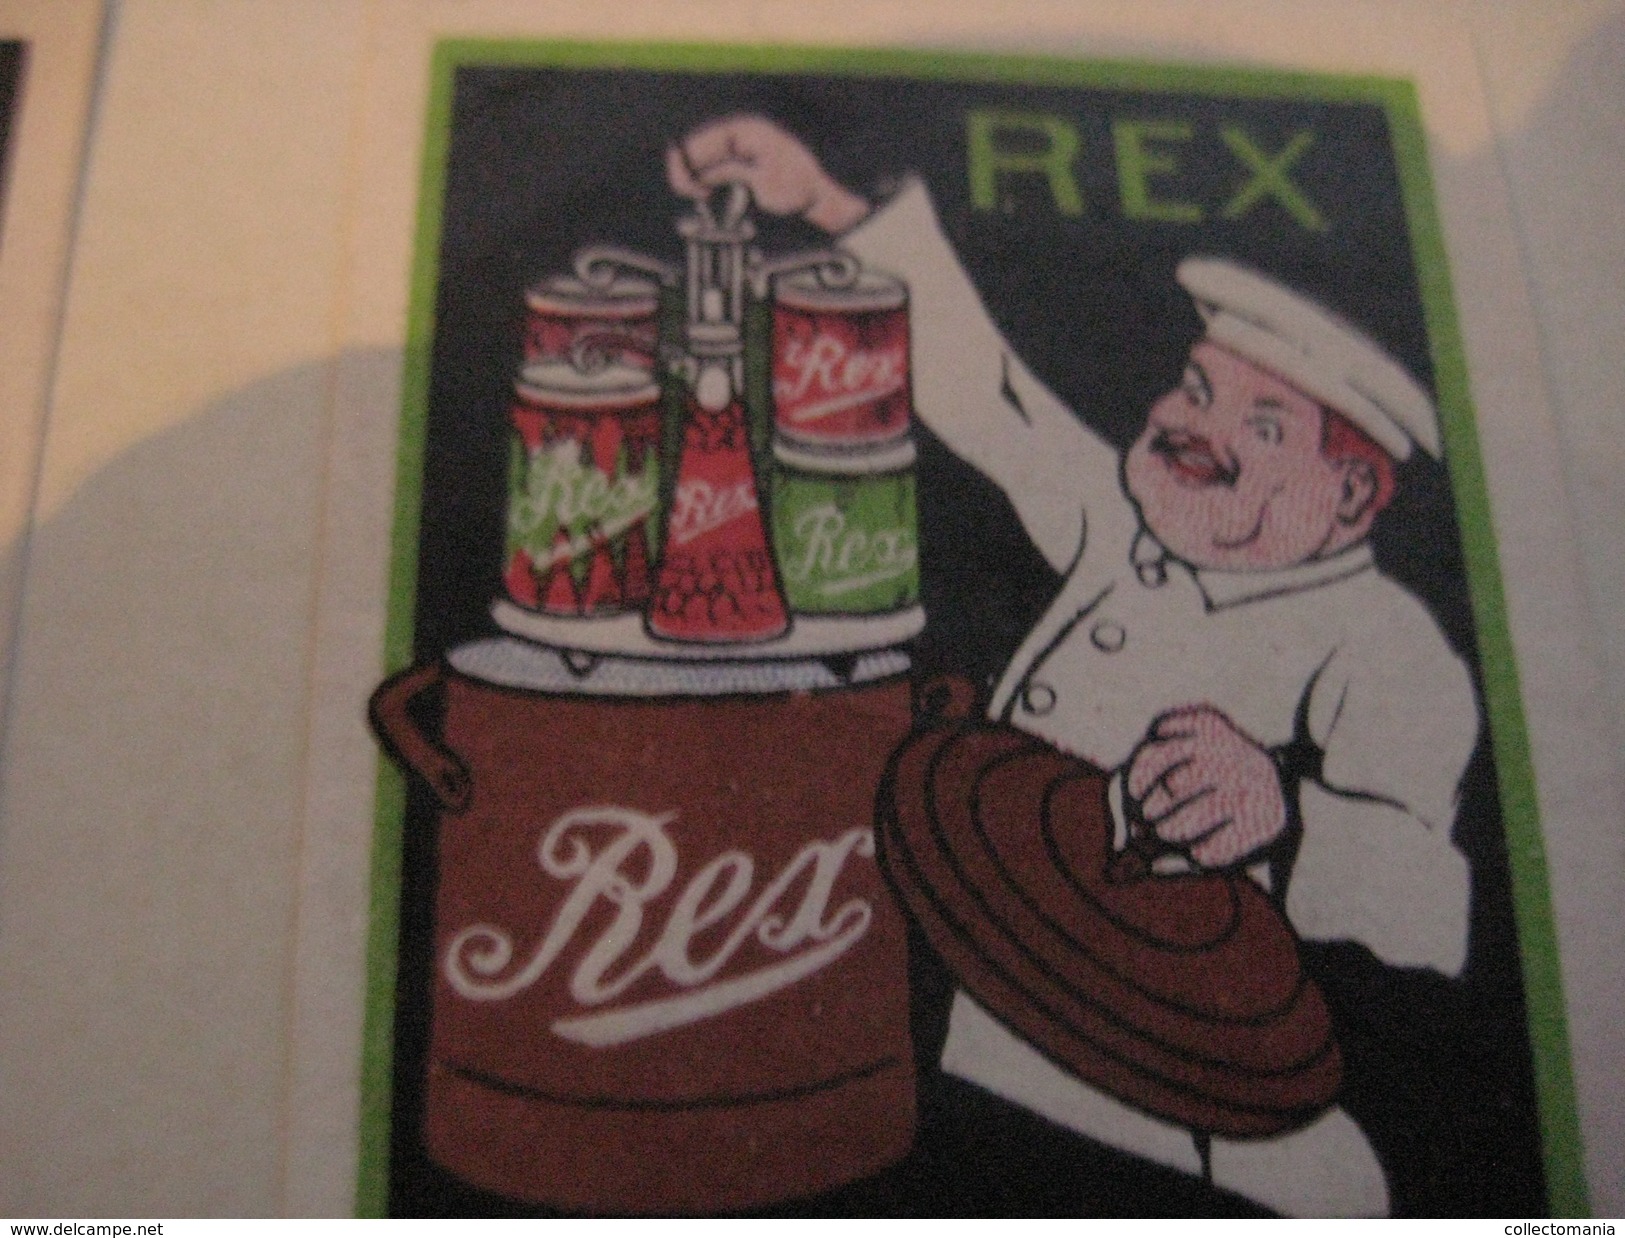 6 poster stamp advertising REX einkochapparat conservenglas  DREYER Dreyers's   litho ART Very Good